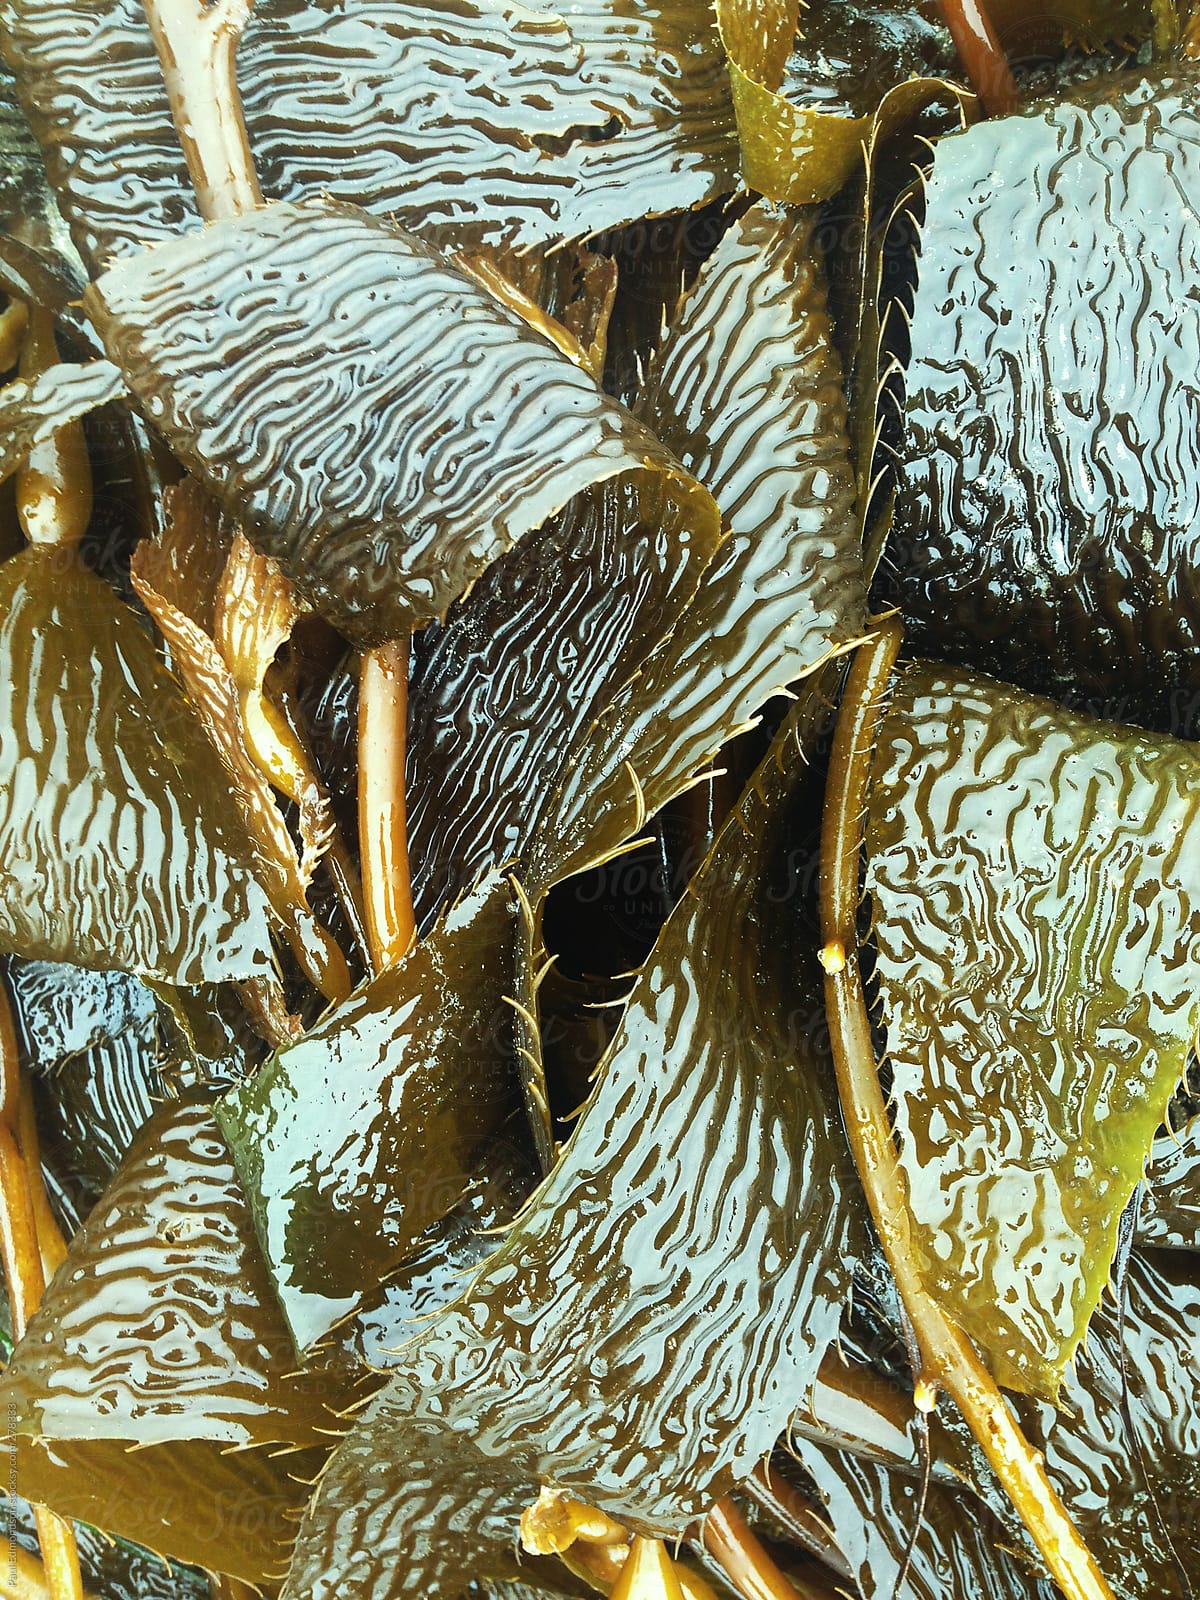 Various types of seaweed and kelp, close-up